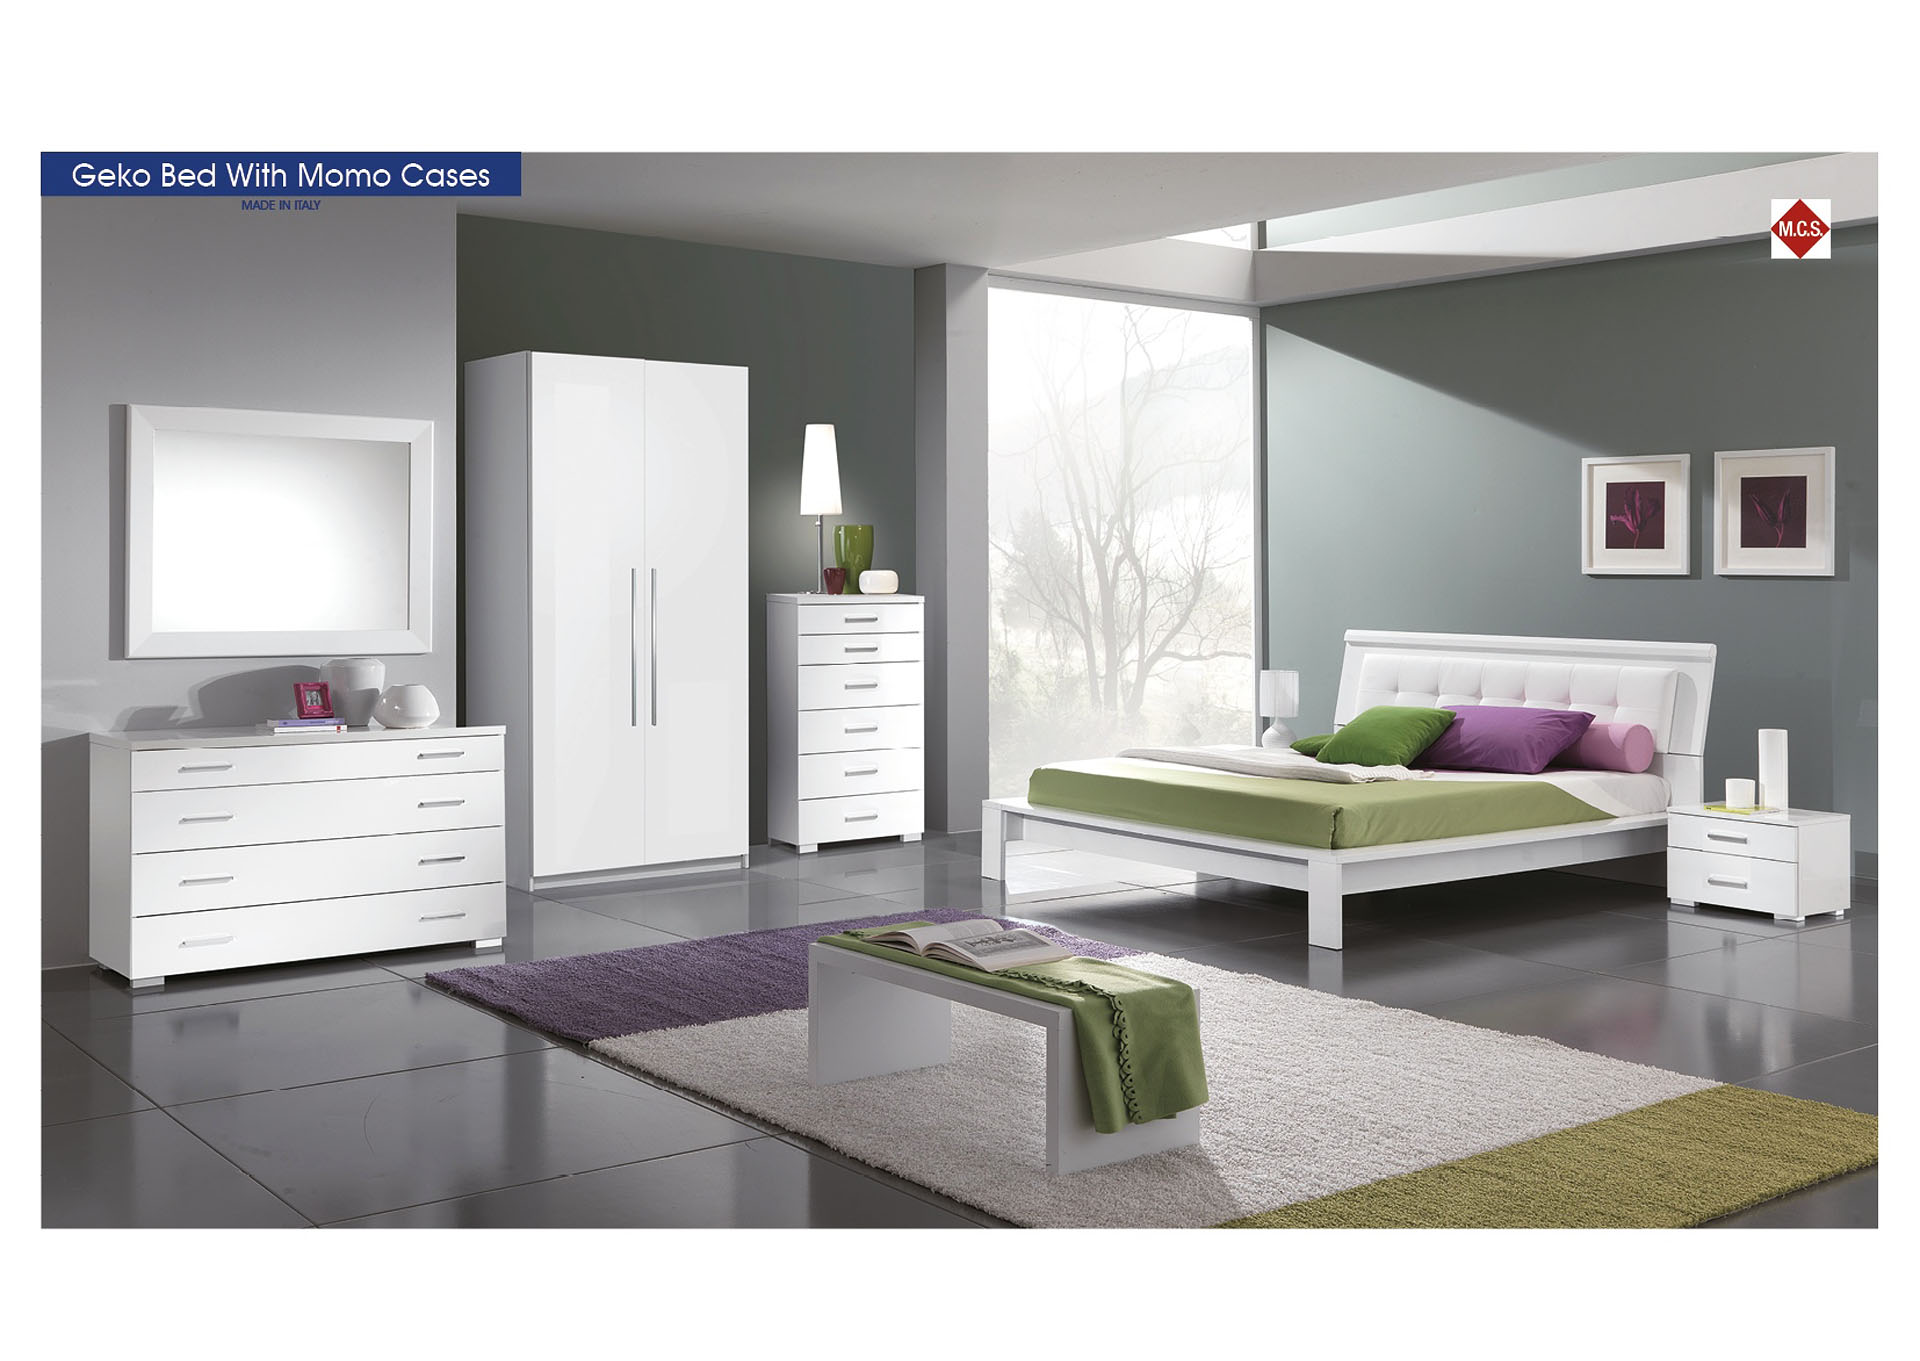 Geko & Momo White Full Bed W/ Dresser & Mirror,ESF Wholesale Furniture